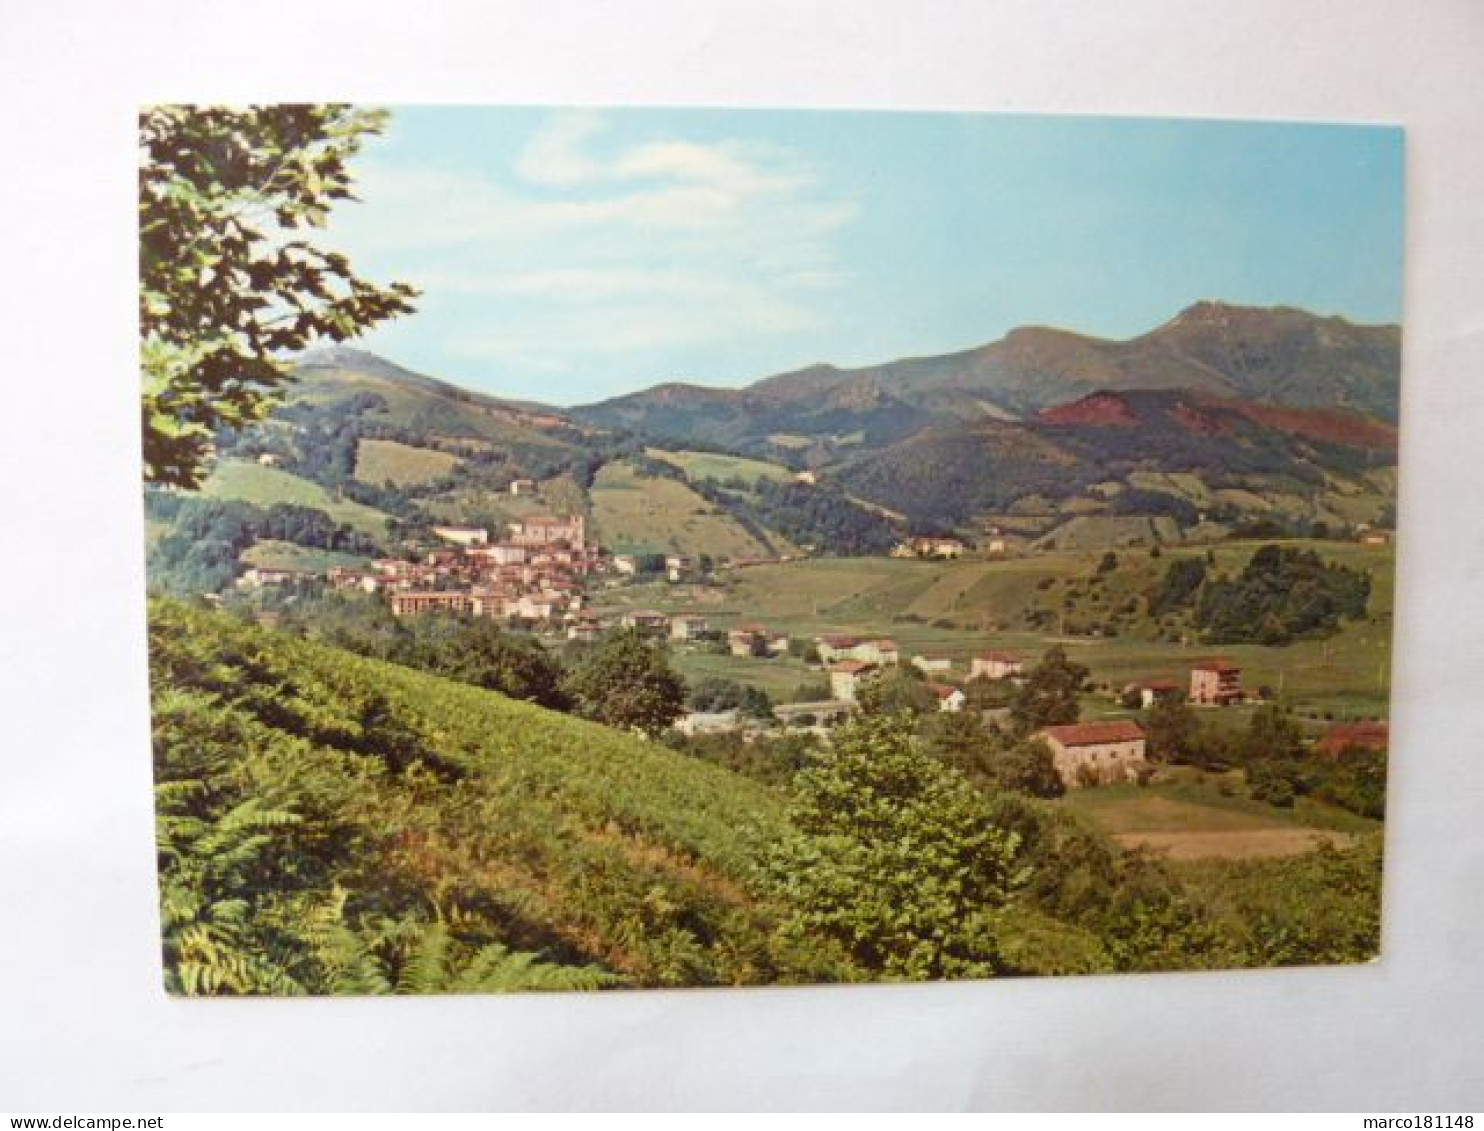 VERA DE BIDASOA - Vue Panoramique - Navarra (Pamplona)